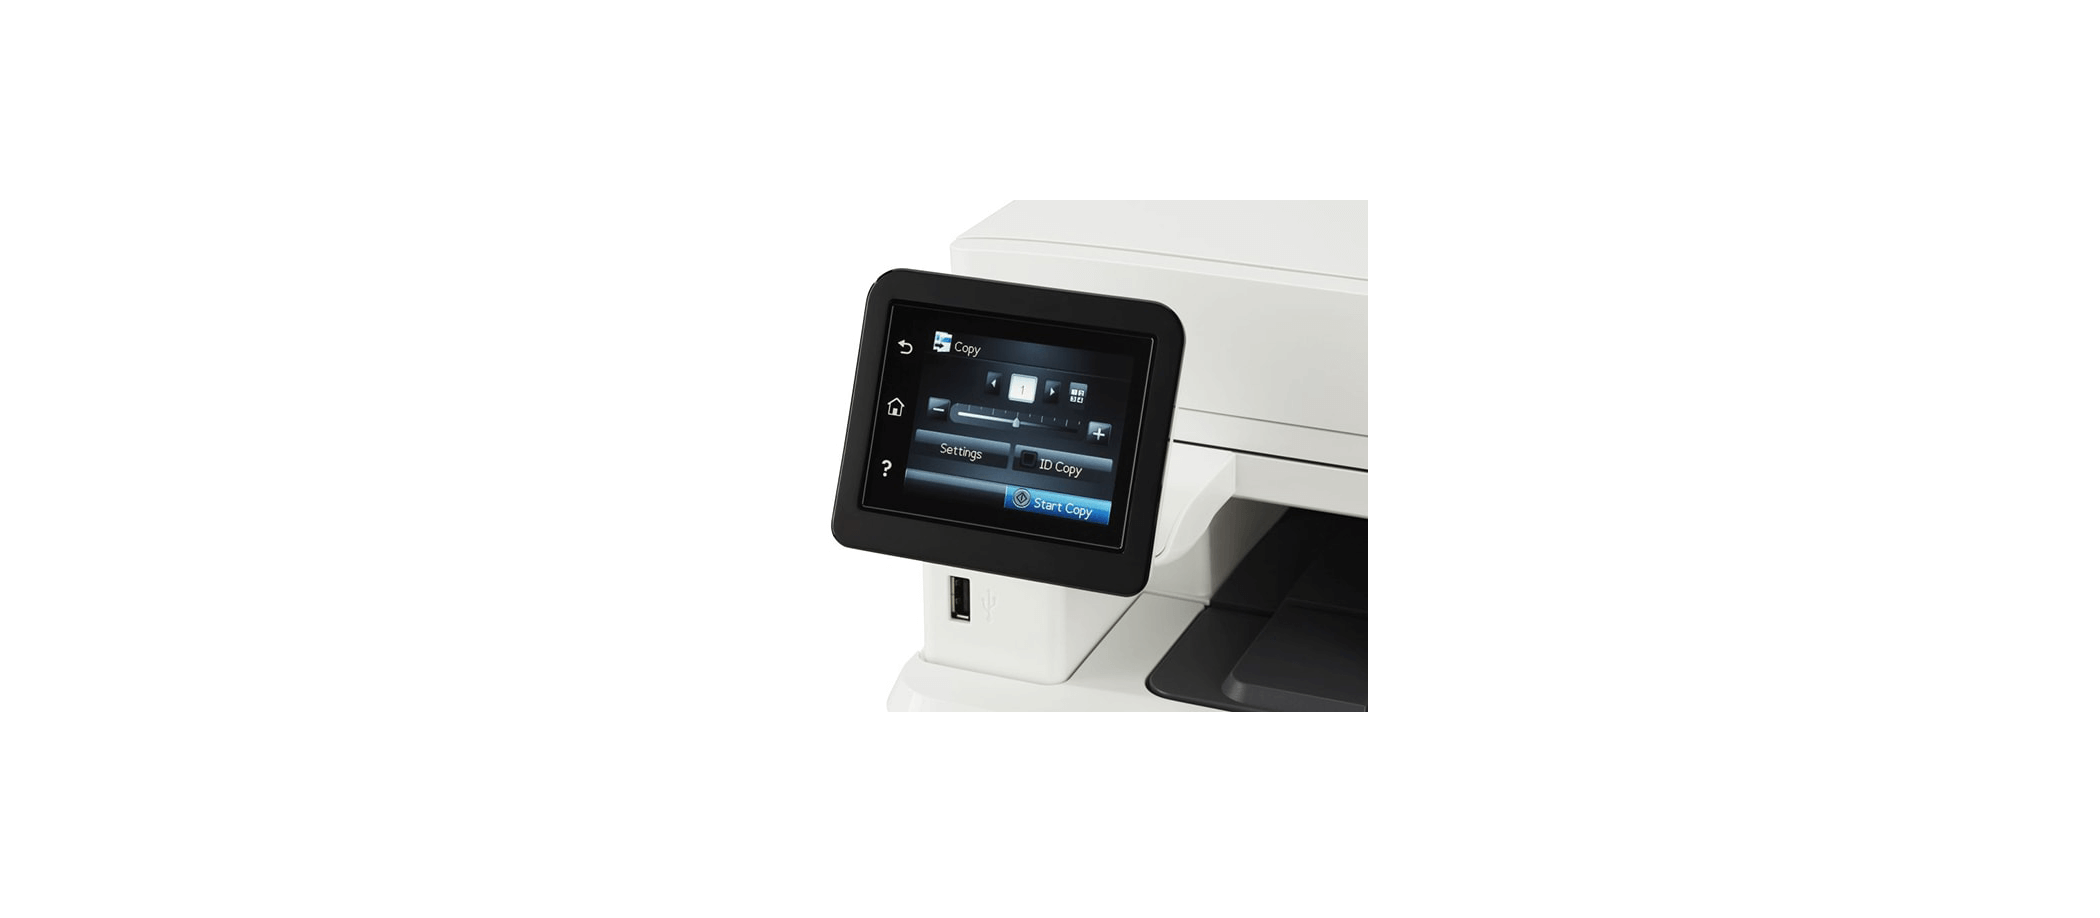 تصویر صفحه نمایش لمسی رنگی 3 اینچی مشخصات پرینتر 426fdn اچ پی